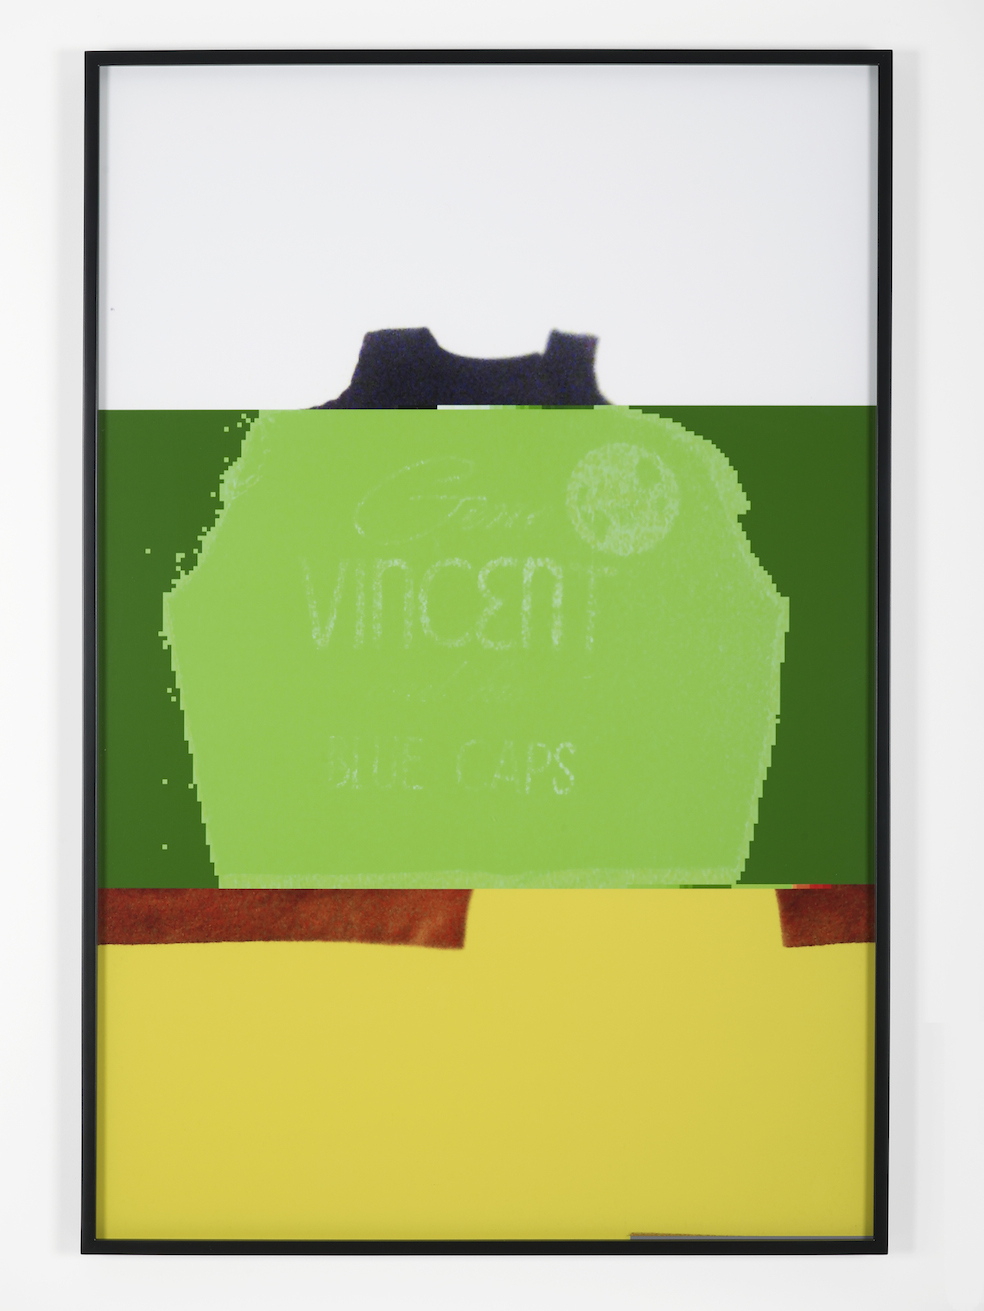     Nick Relph Freckled Lemonade 2014 Archival Pigment Print 106.6 x 71.1 cm / 42 x 28 in 